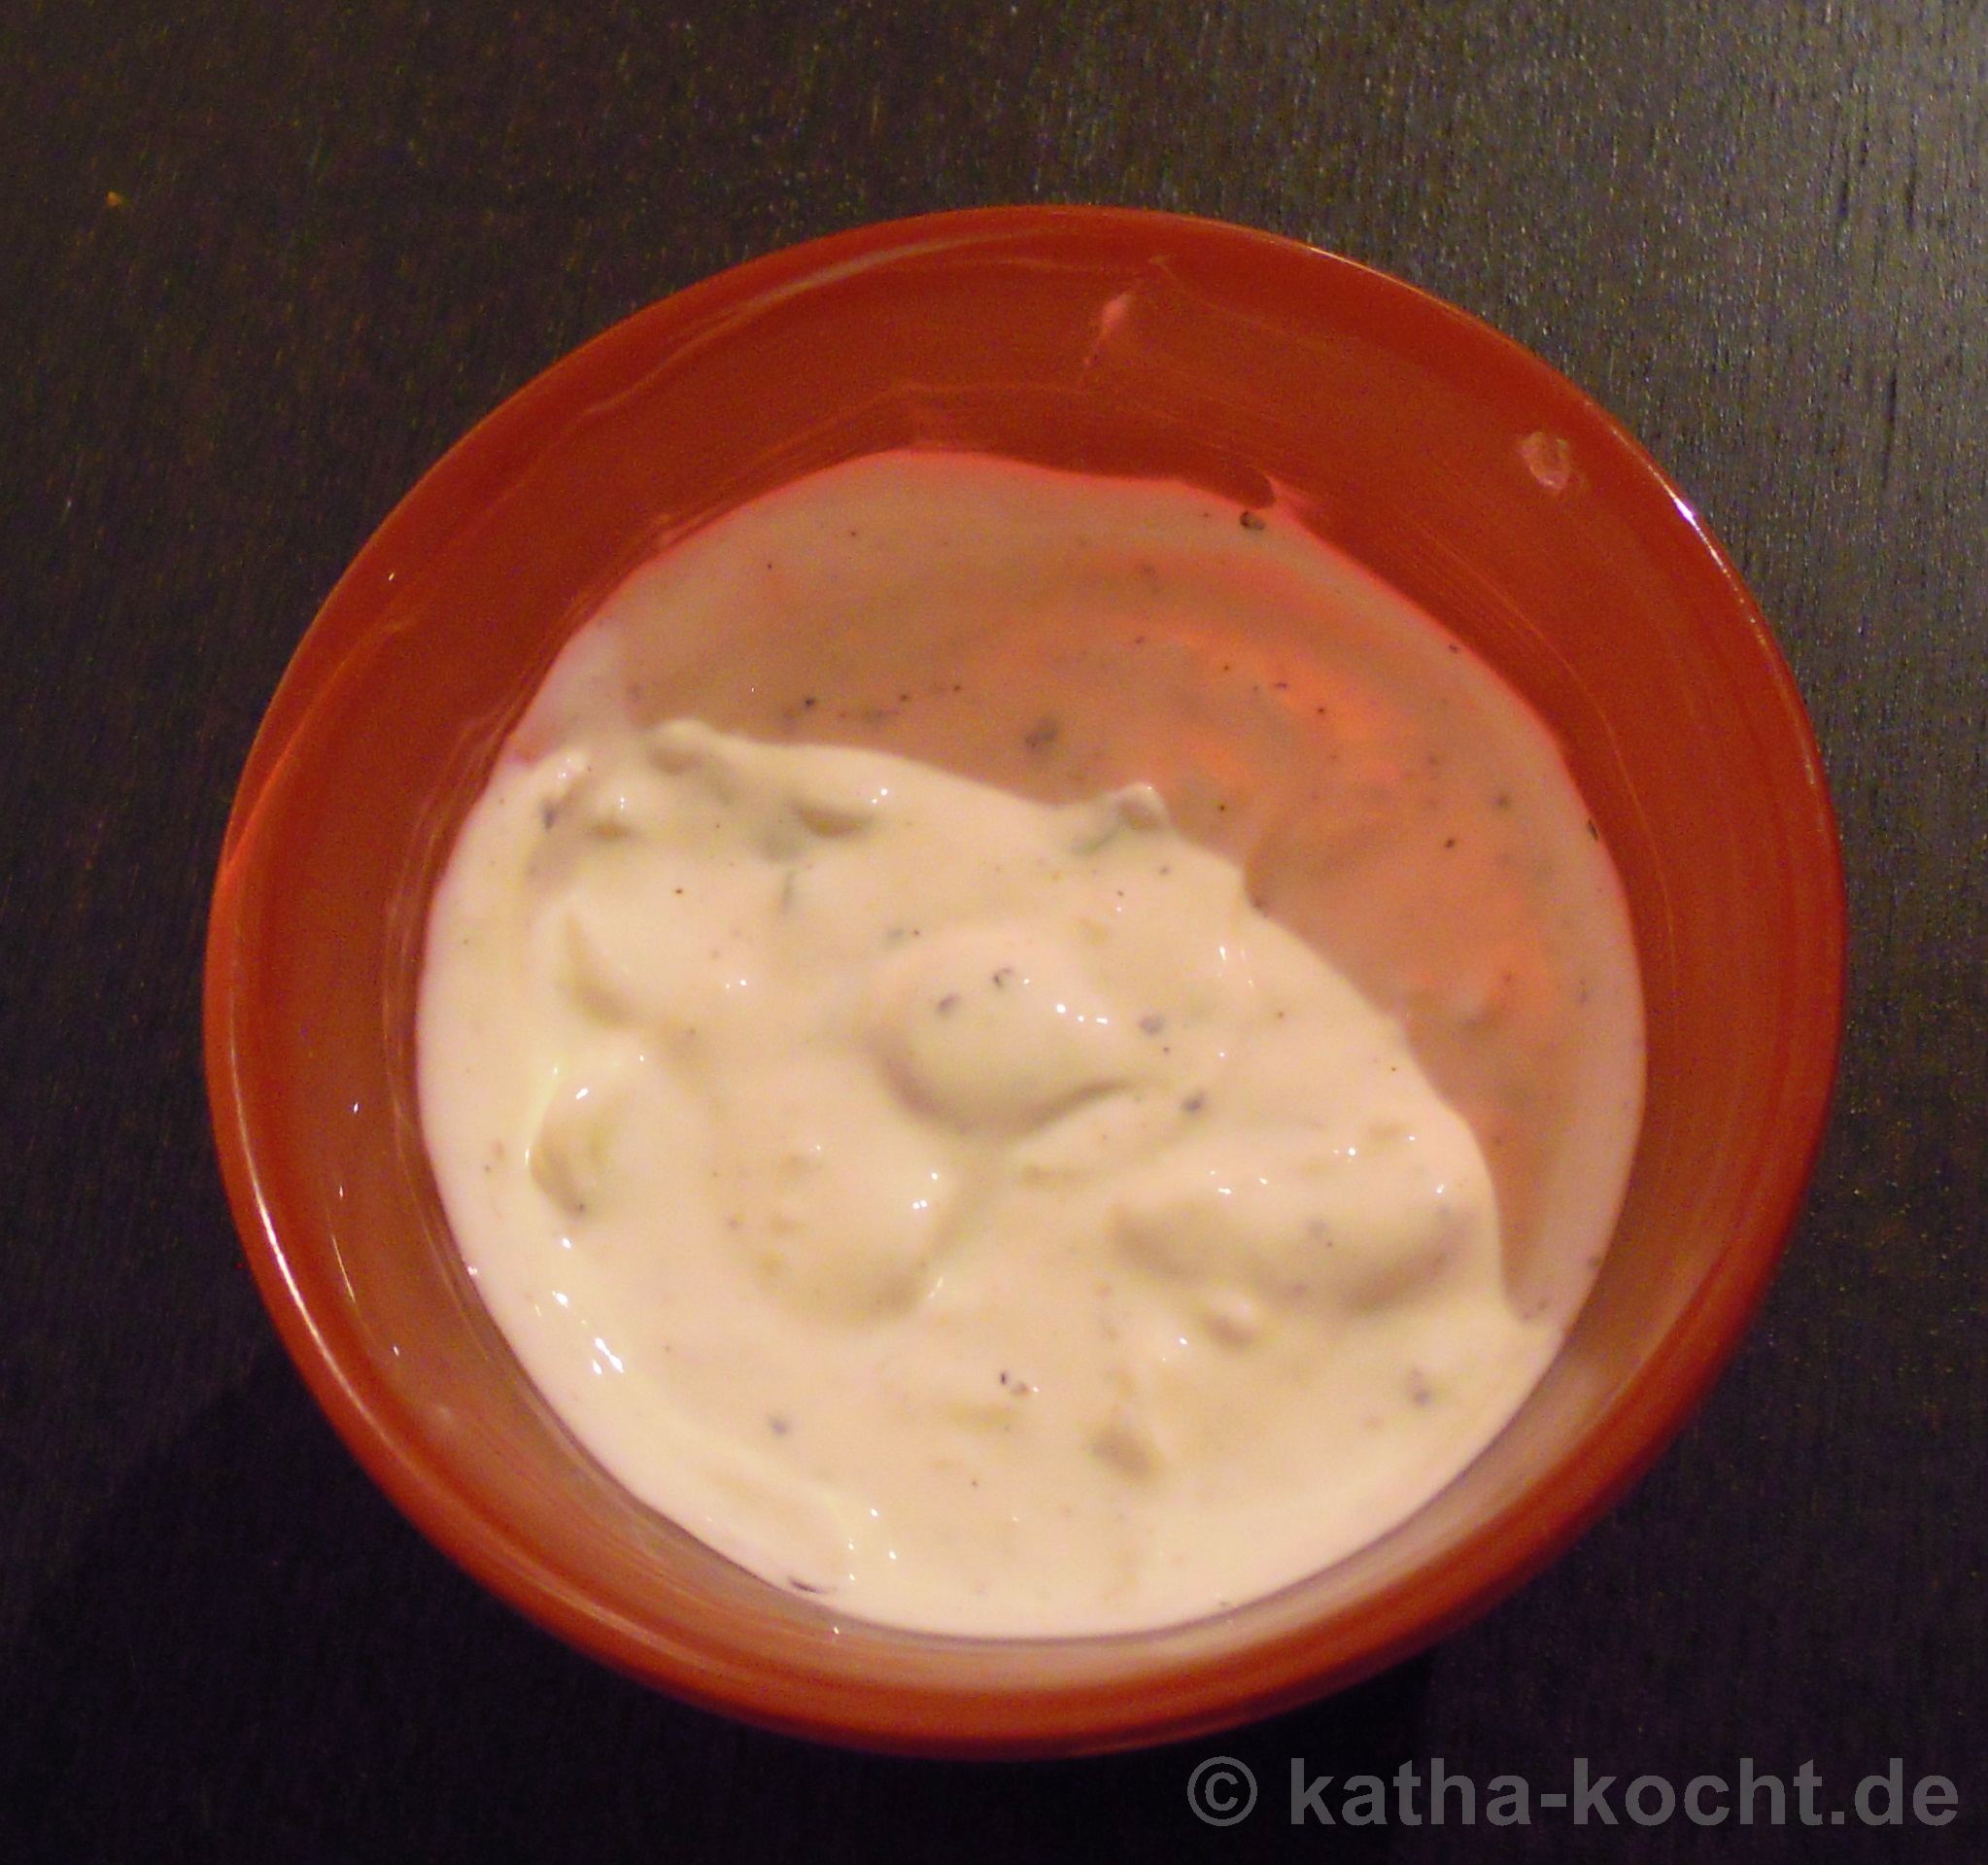 Knoblauch-Joghurt Dip - Katha-kocht!